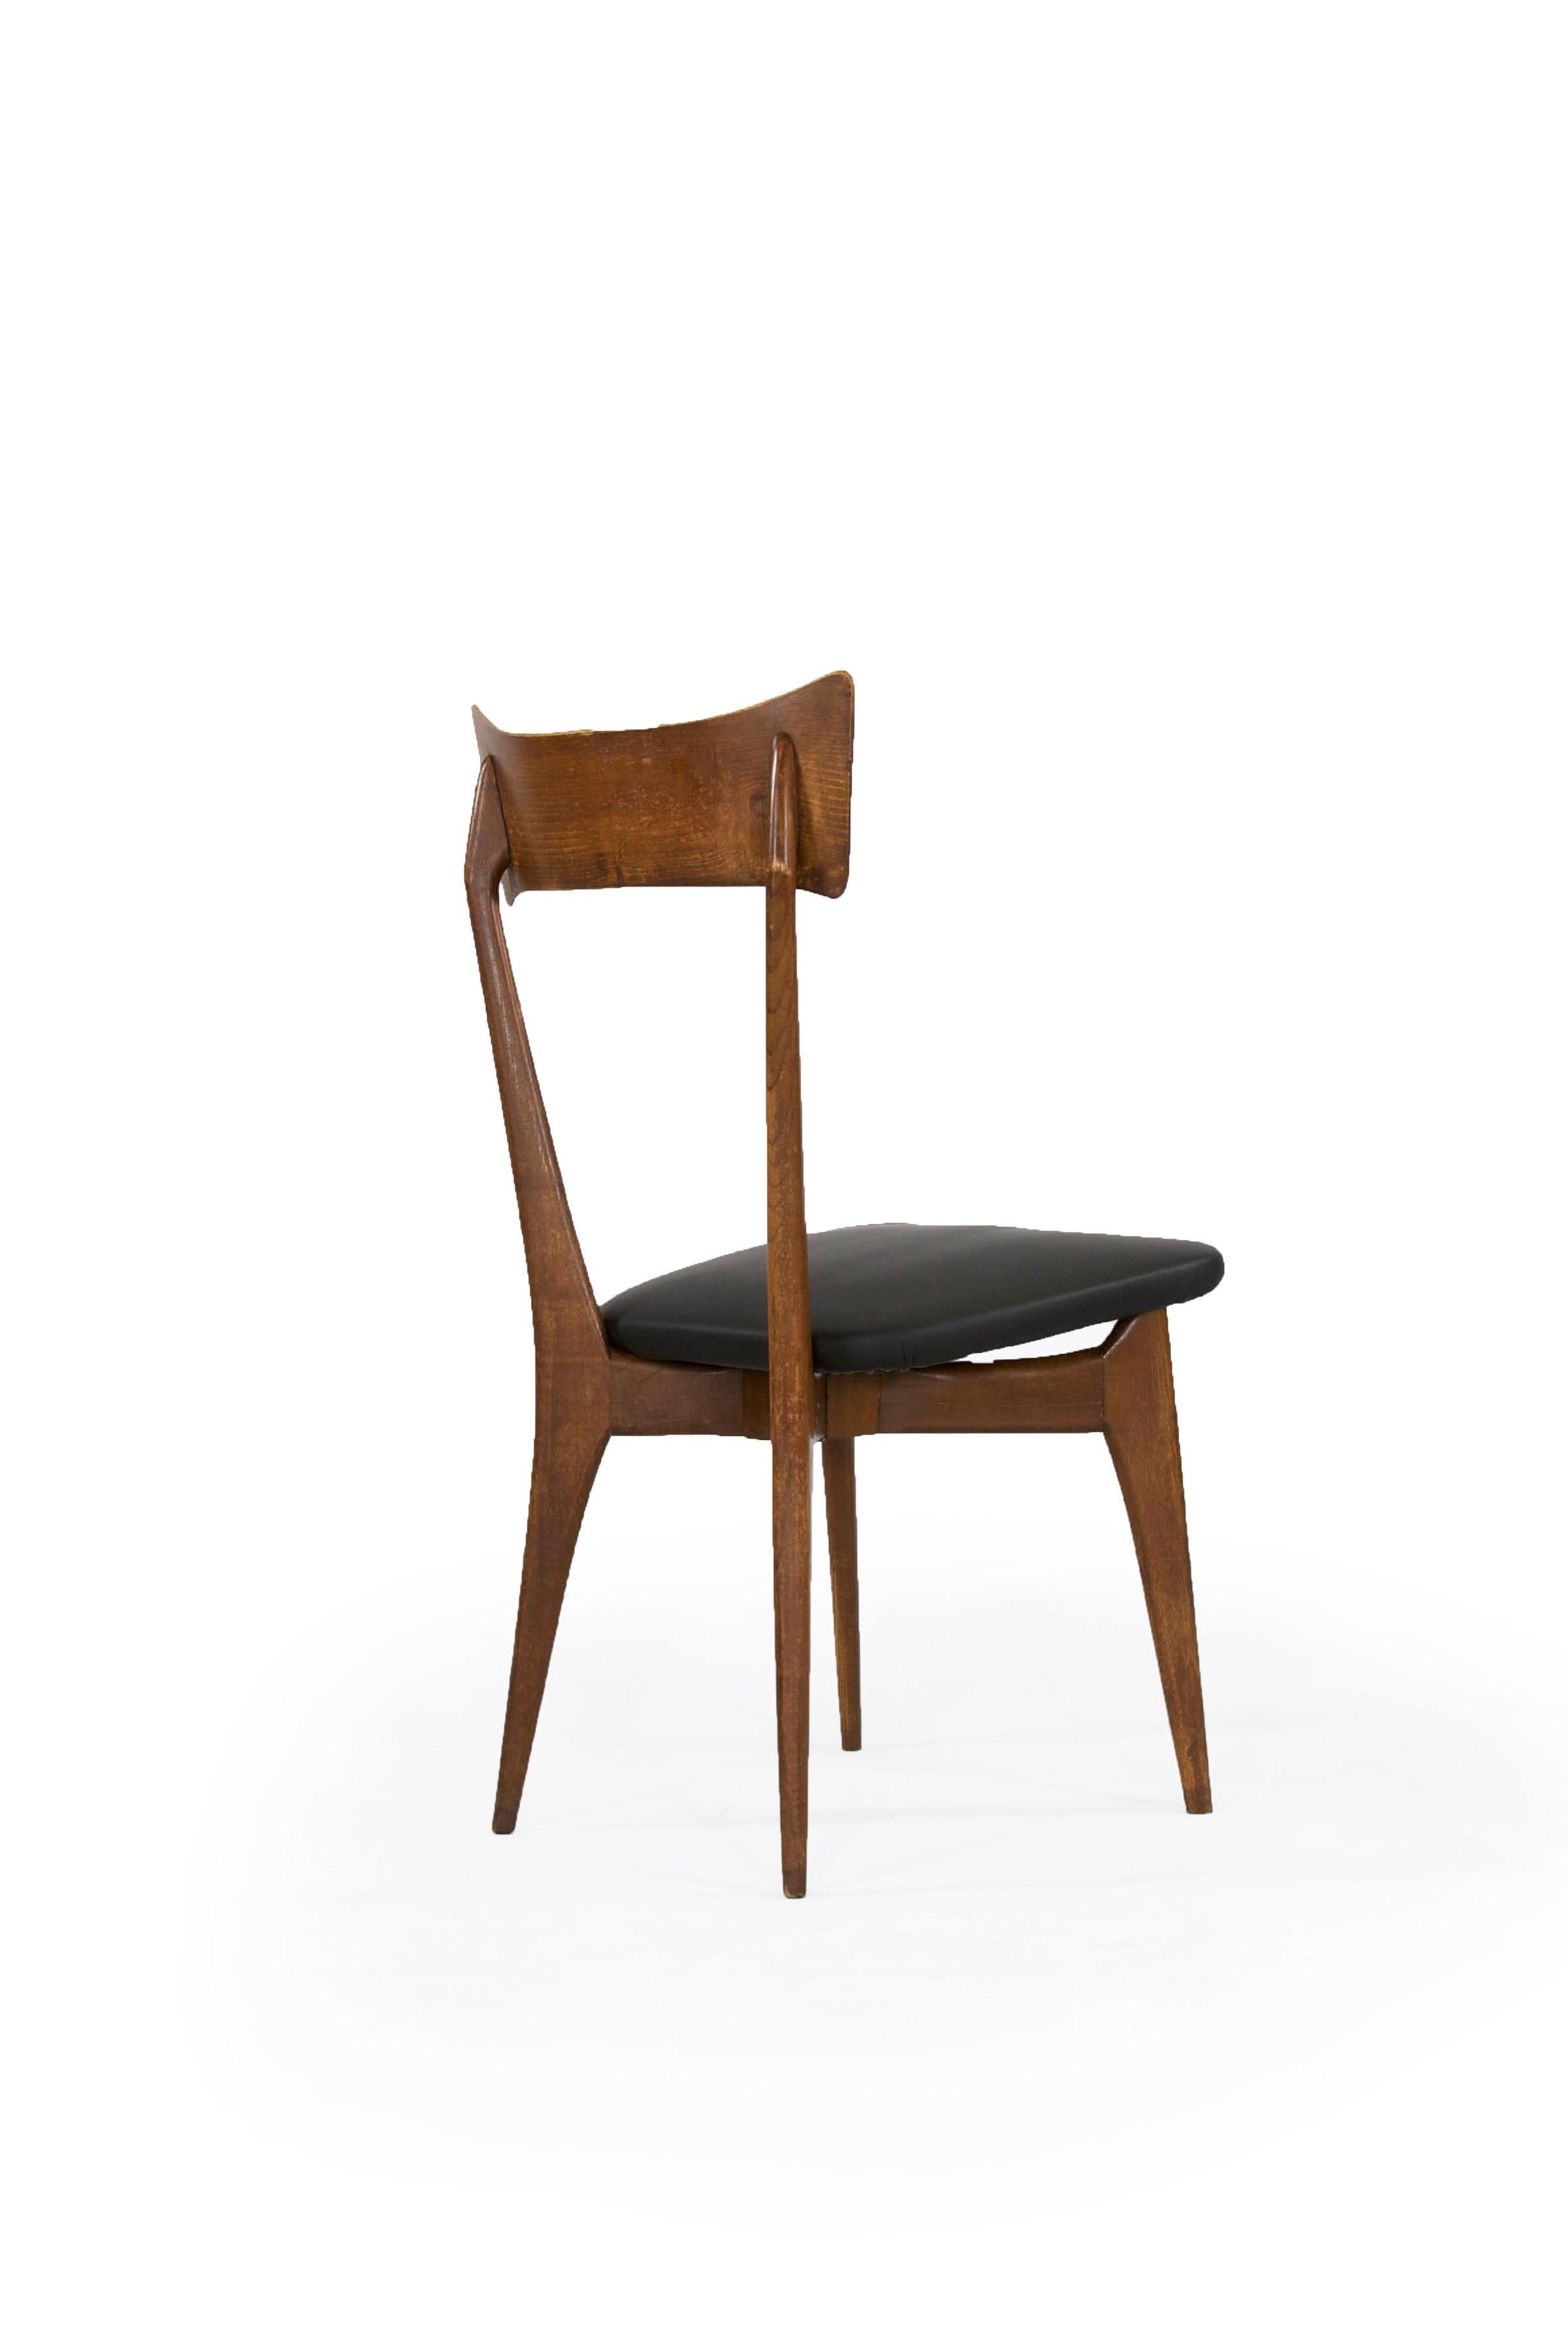 Italian Chair, Design by Ico & Luisa Parisi, Italy, 1940s